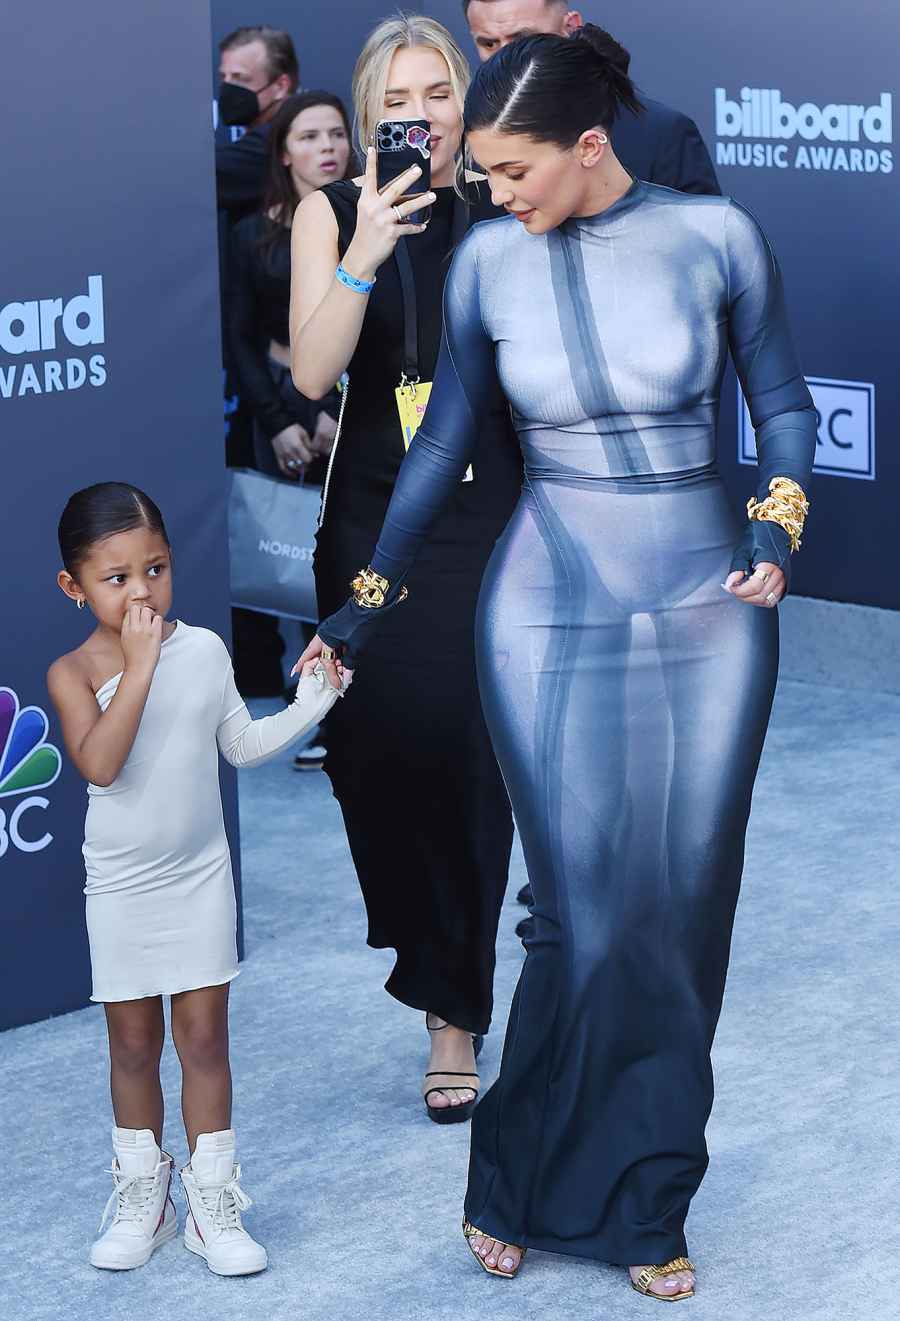 Kylie Jenner Travis Scott Enjoy Night BBMAs With Daughter Stormi